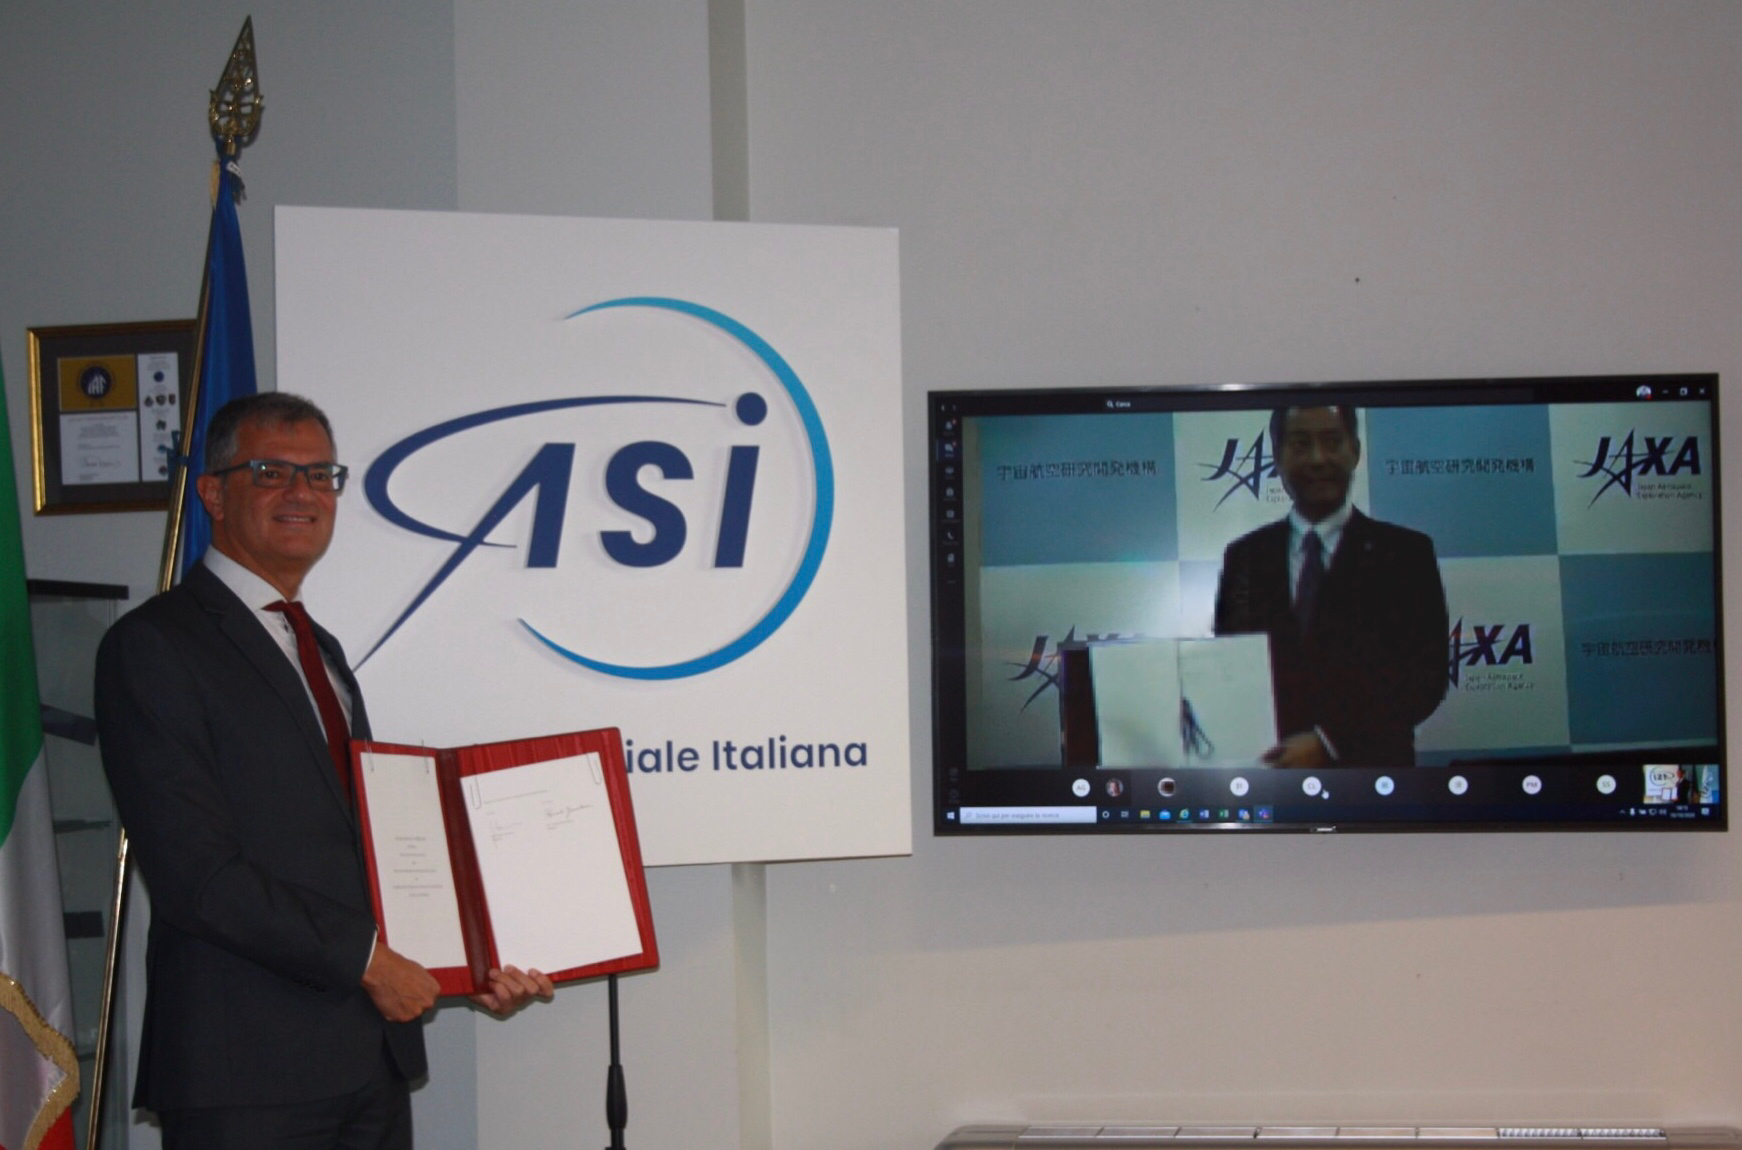 ASI - ASI and JAXA sign the Memorandum of Cooperation